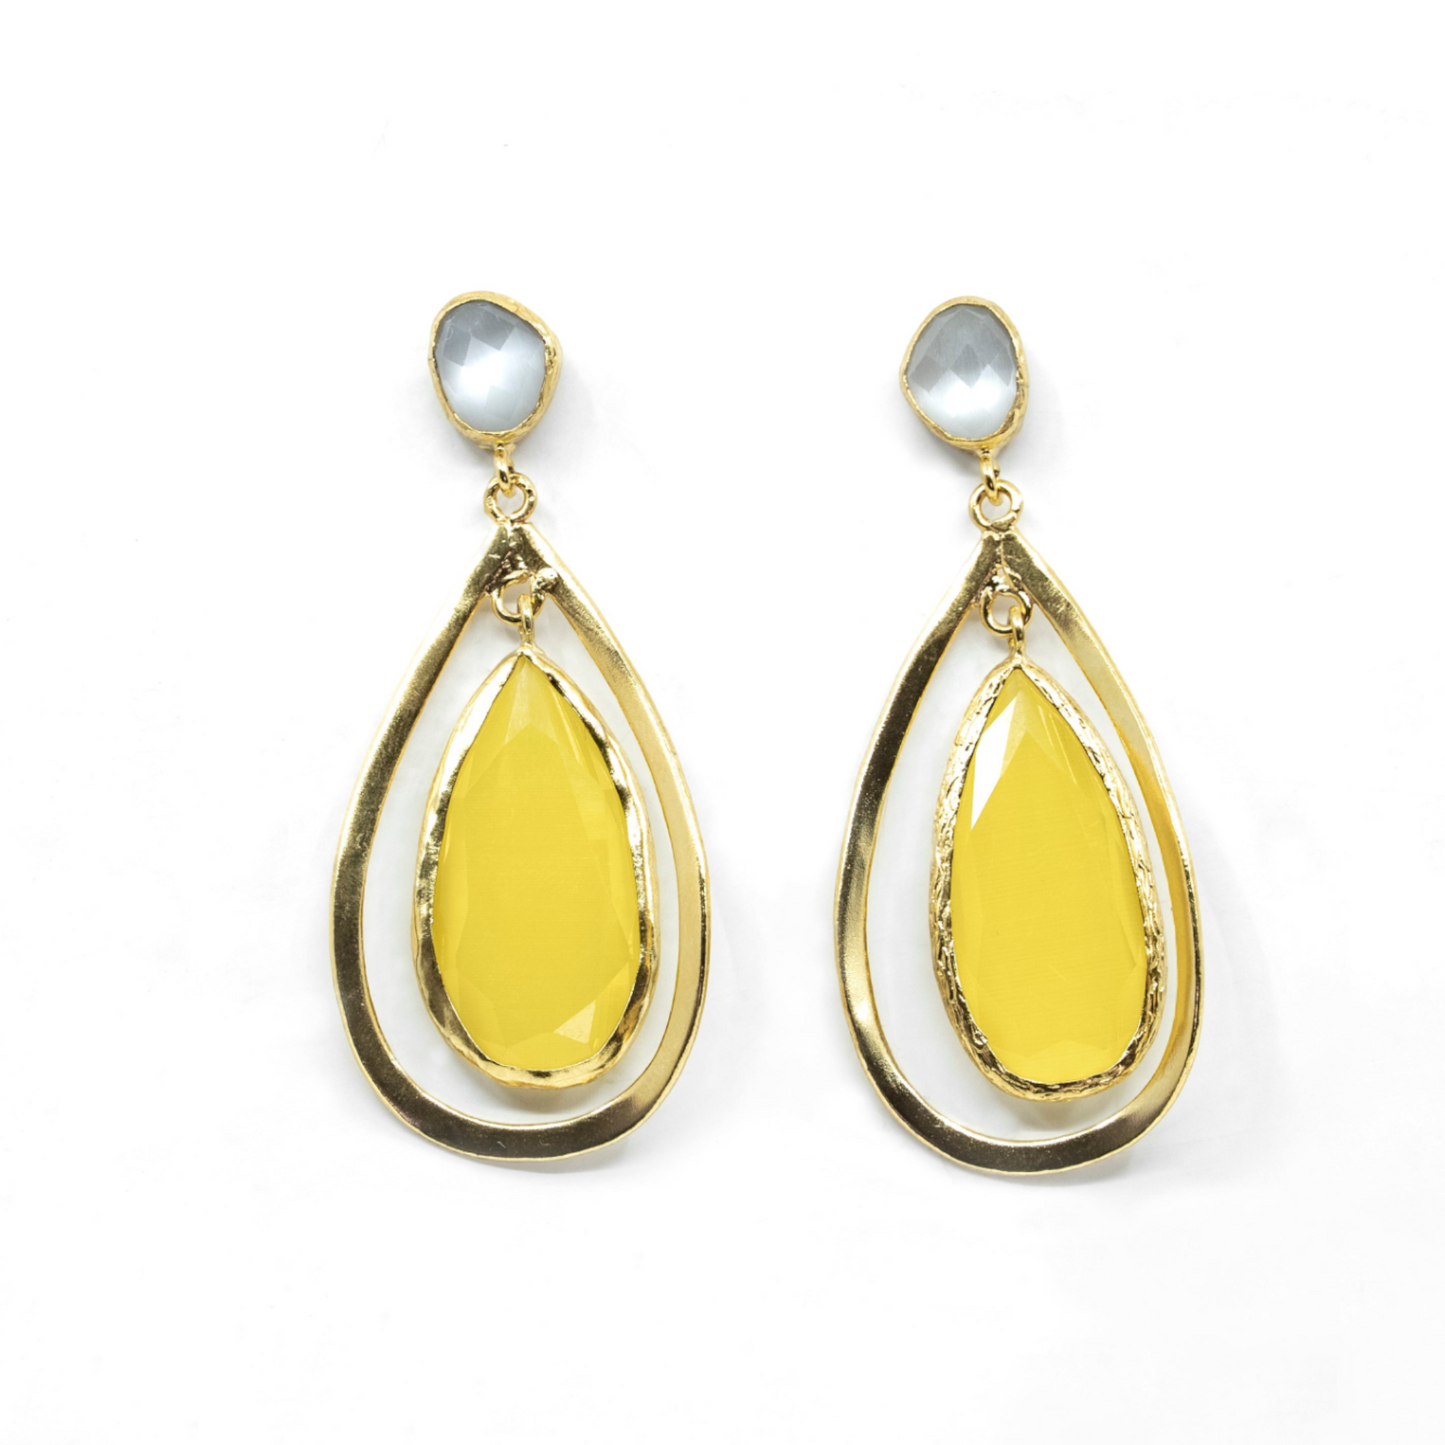 Tear Drop Dangling Earing with yellow stone - shopzeyzey